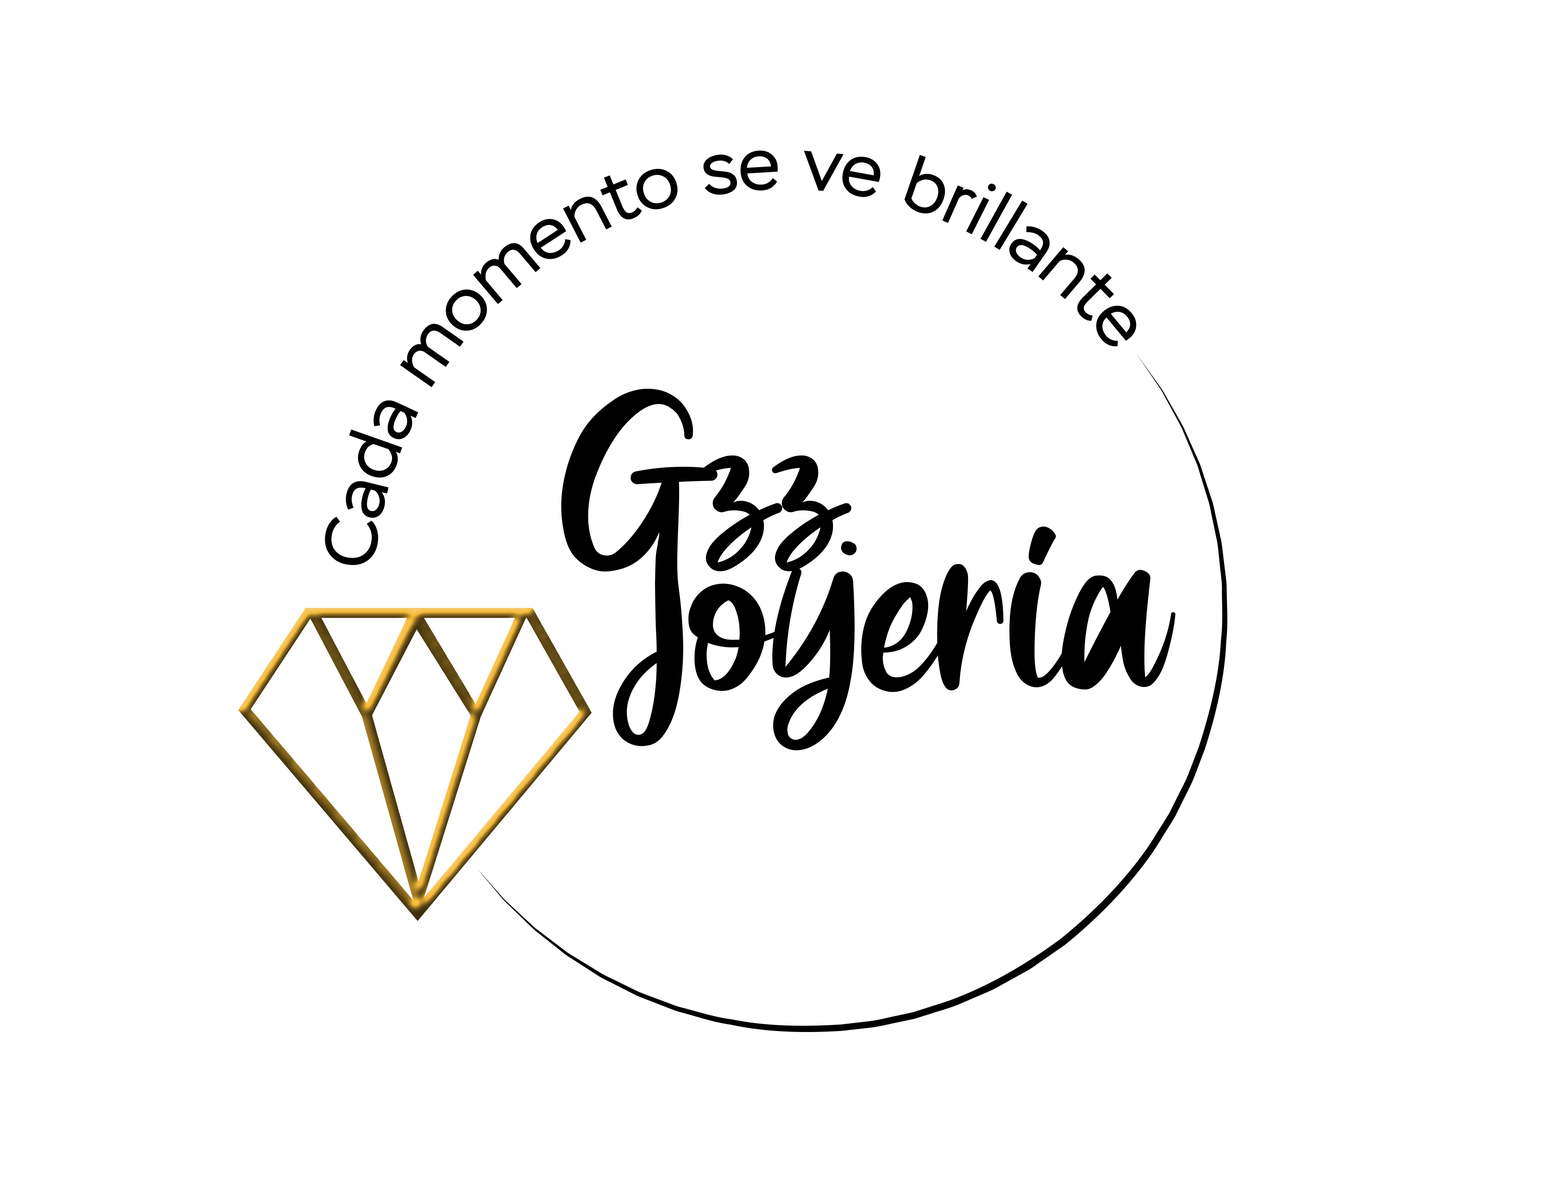 isologo gzz joyeria by tallergraficodesign on Dribbble